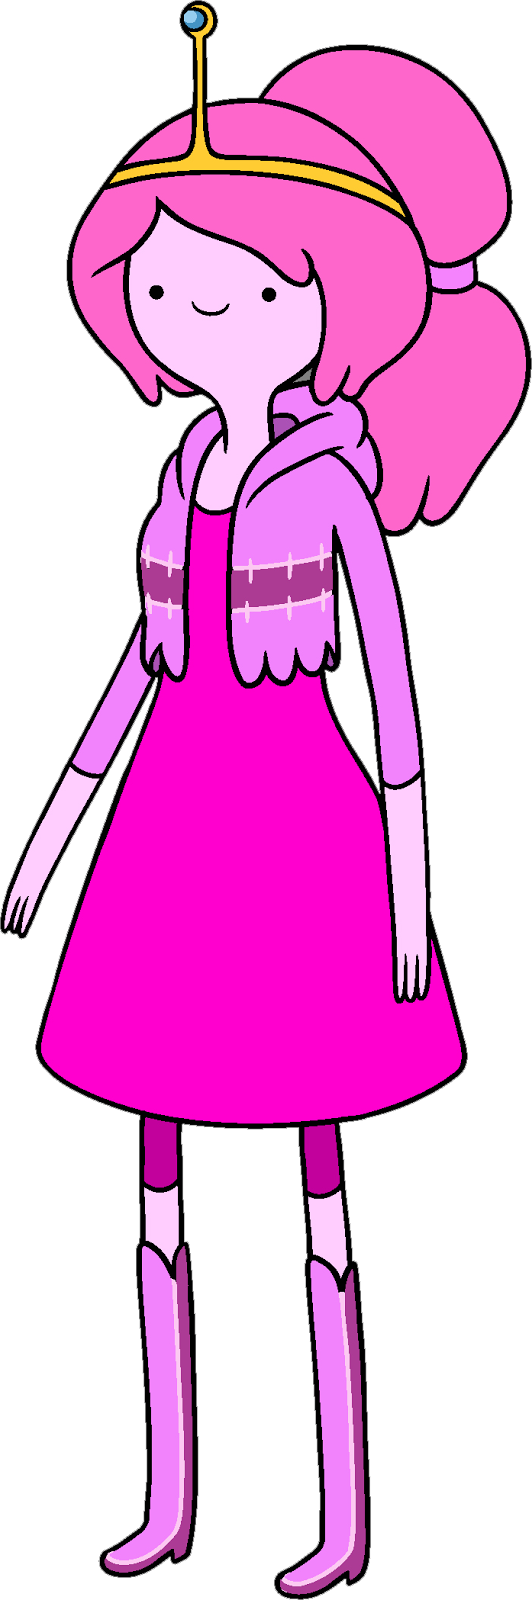 Animated Princess Character Standing PNG image